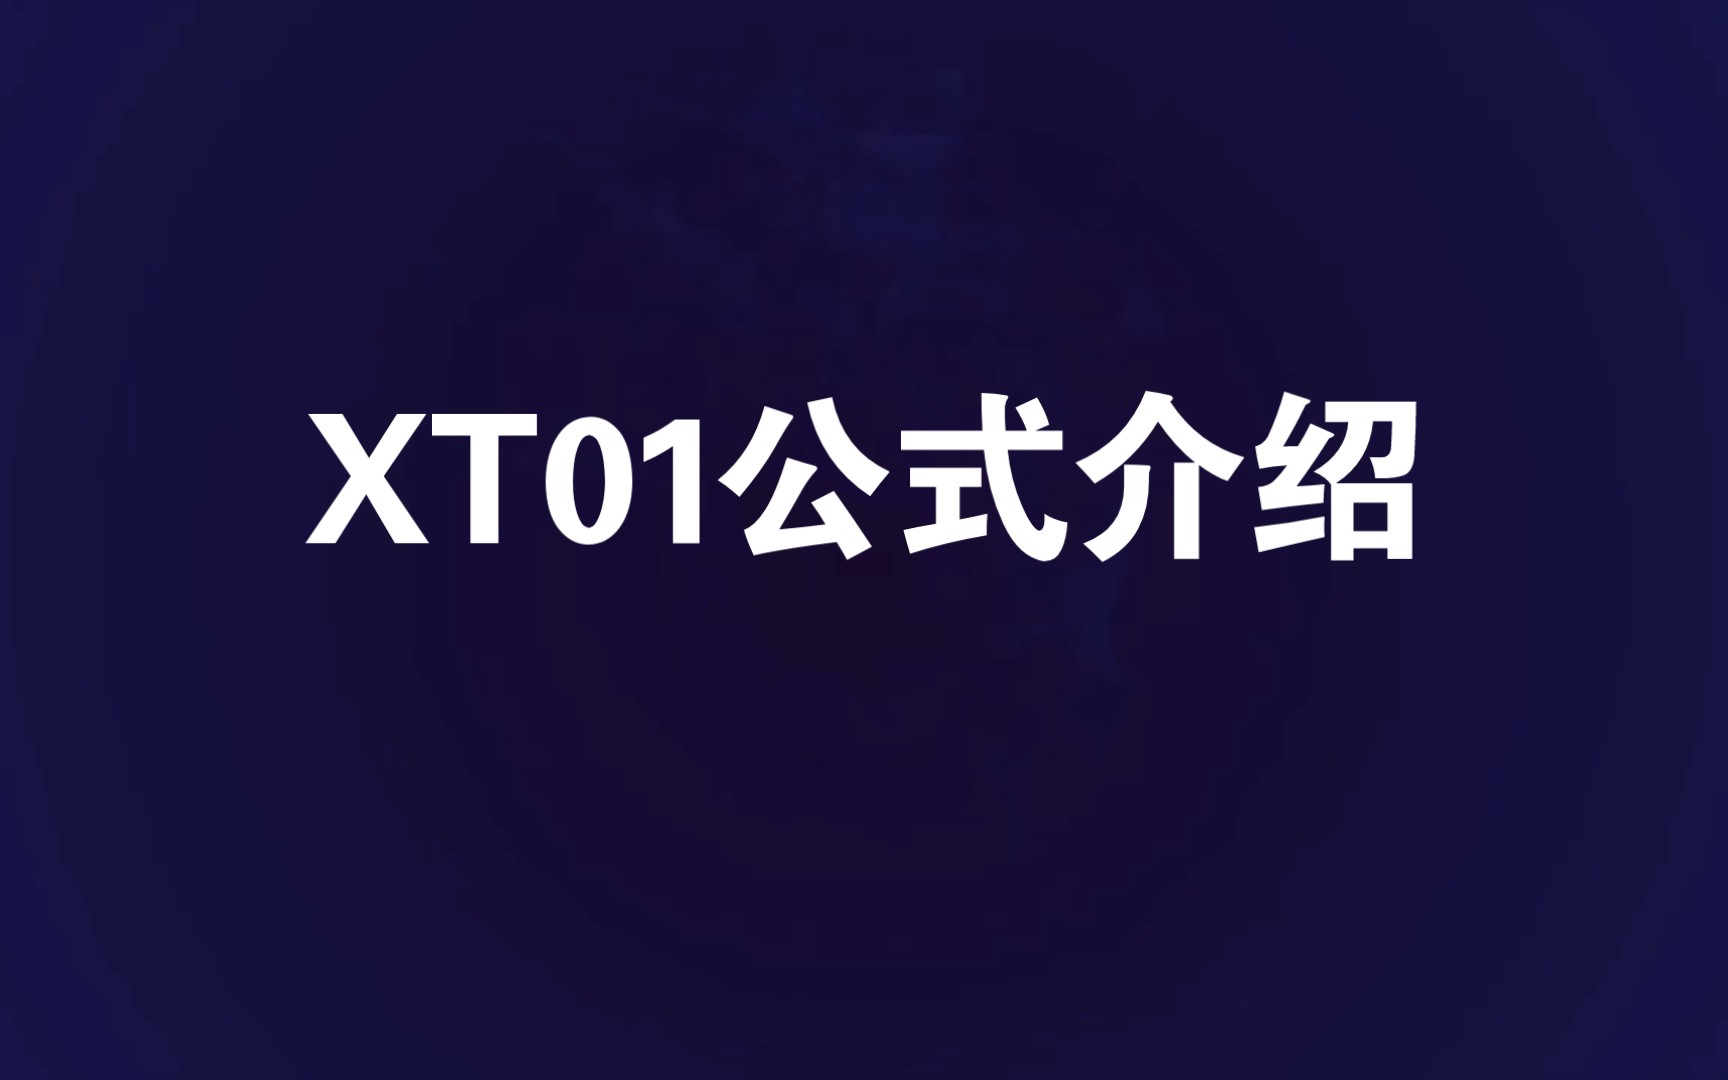 xt01 介绍